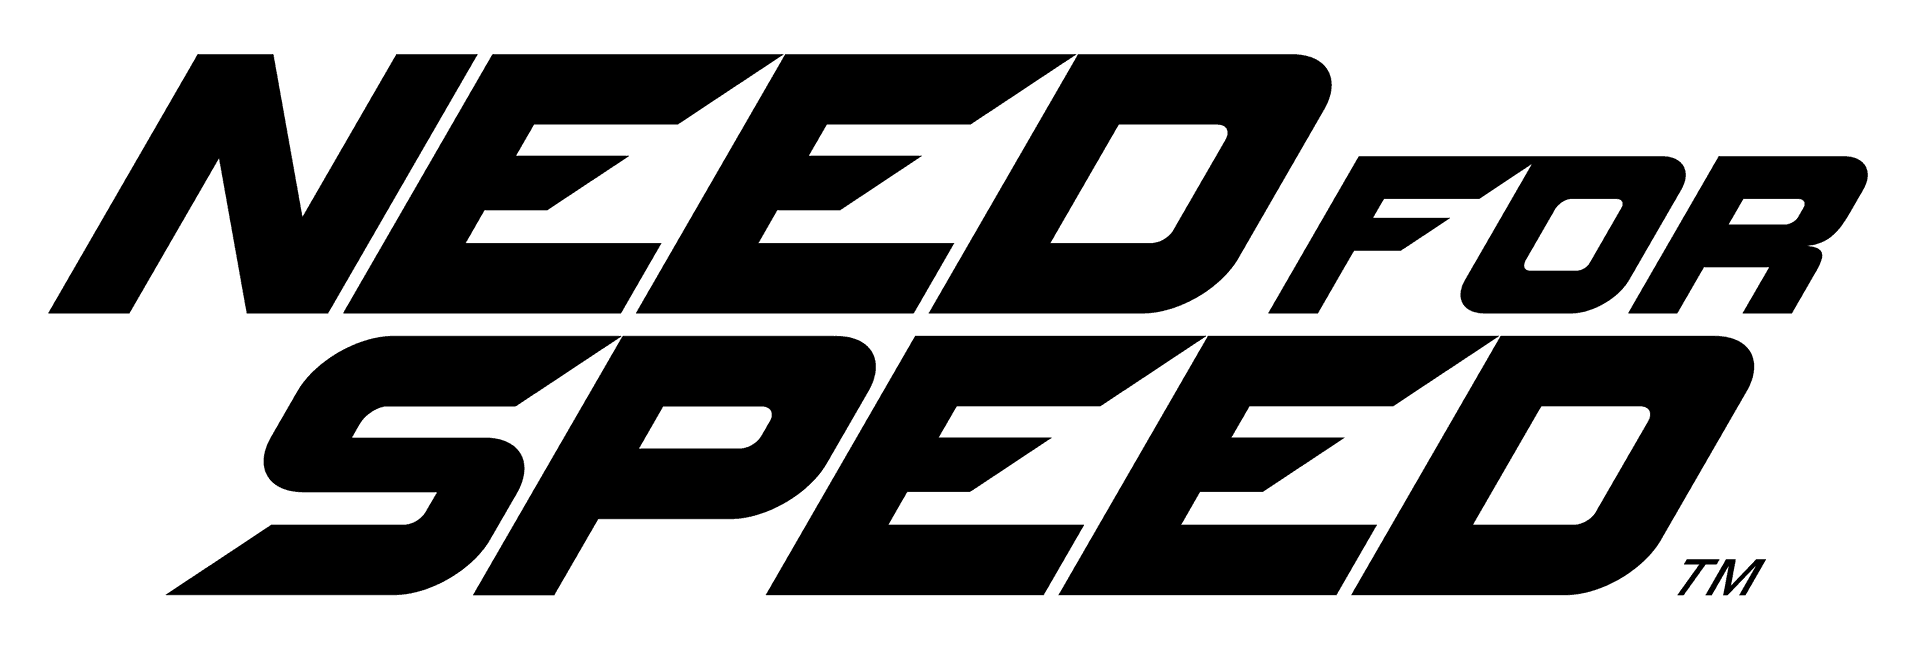 Needfor Speed Logo PNG